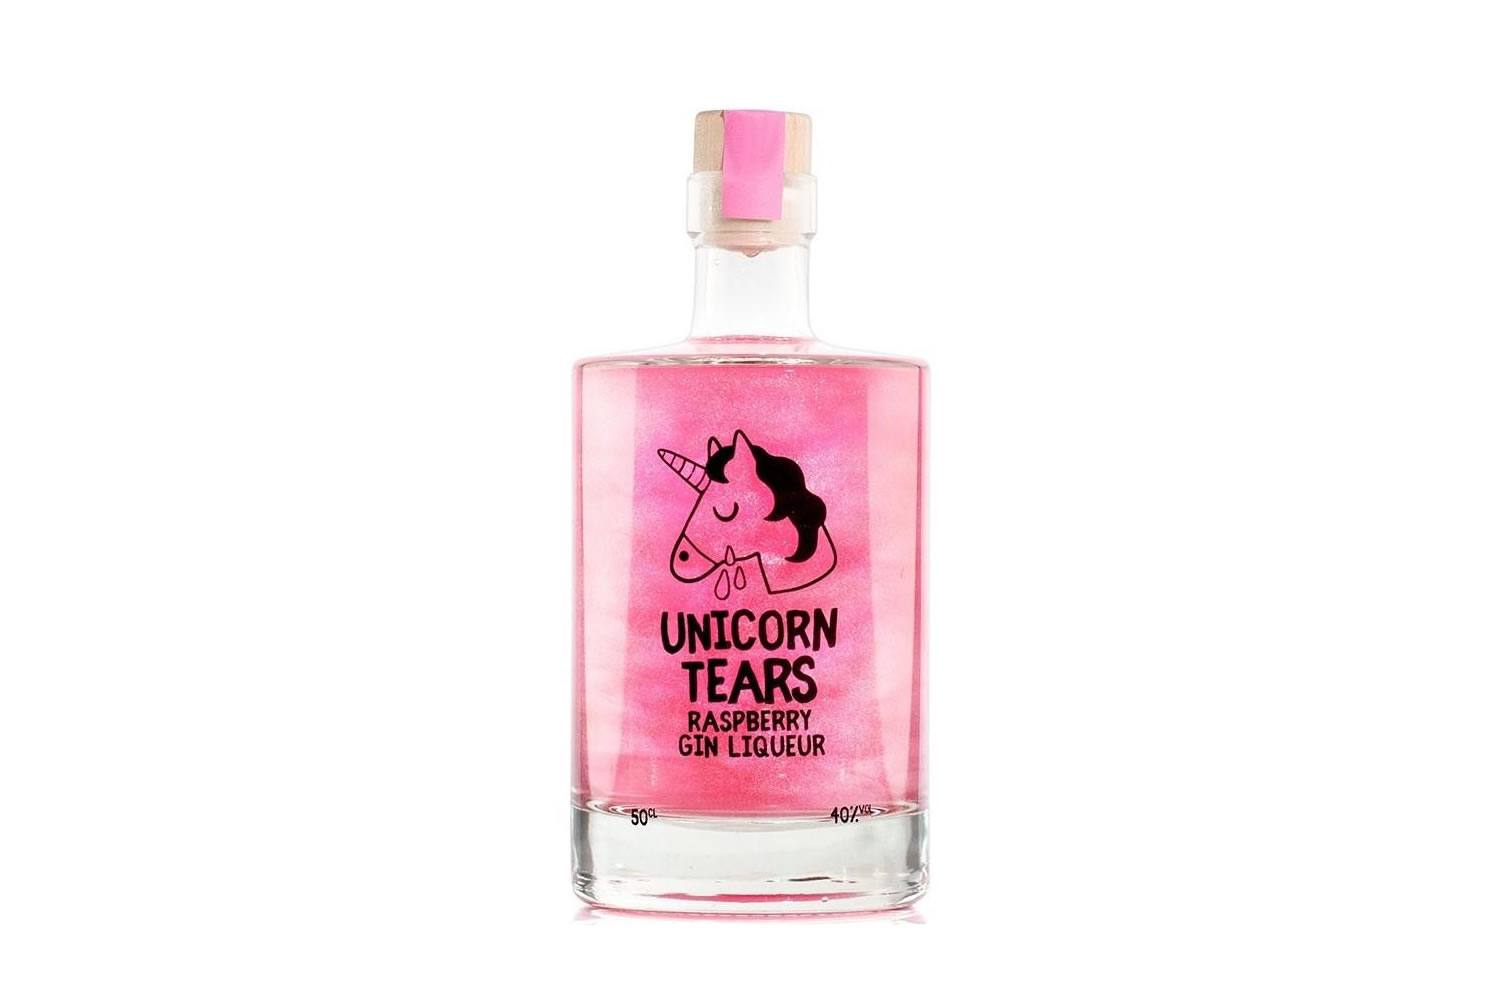 Unicorn Tears Raspberry Gin Liqueur.